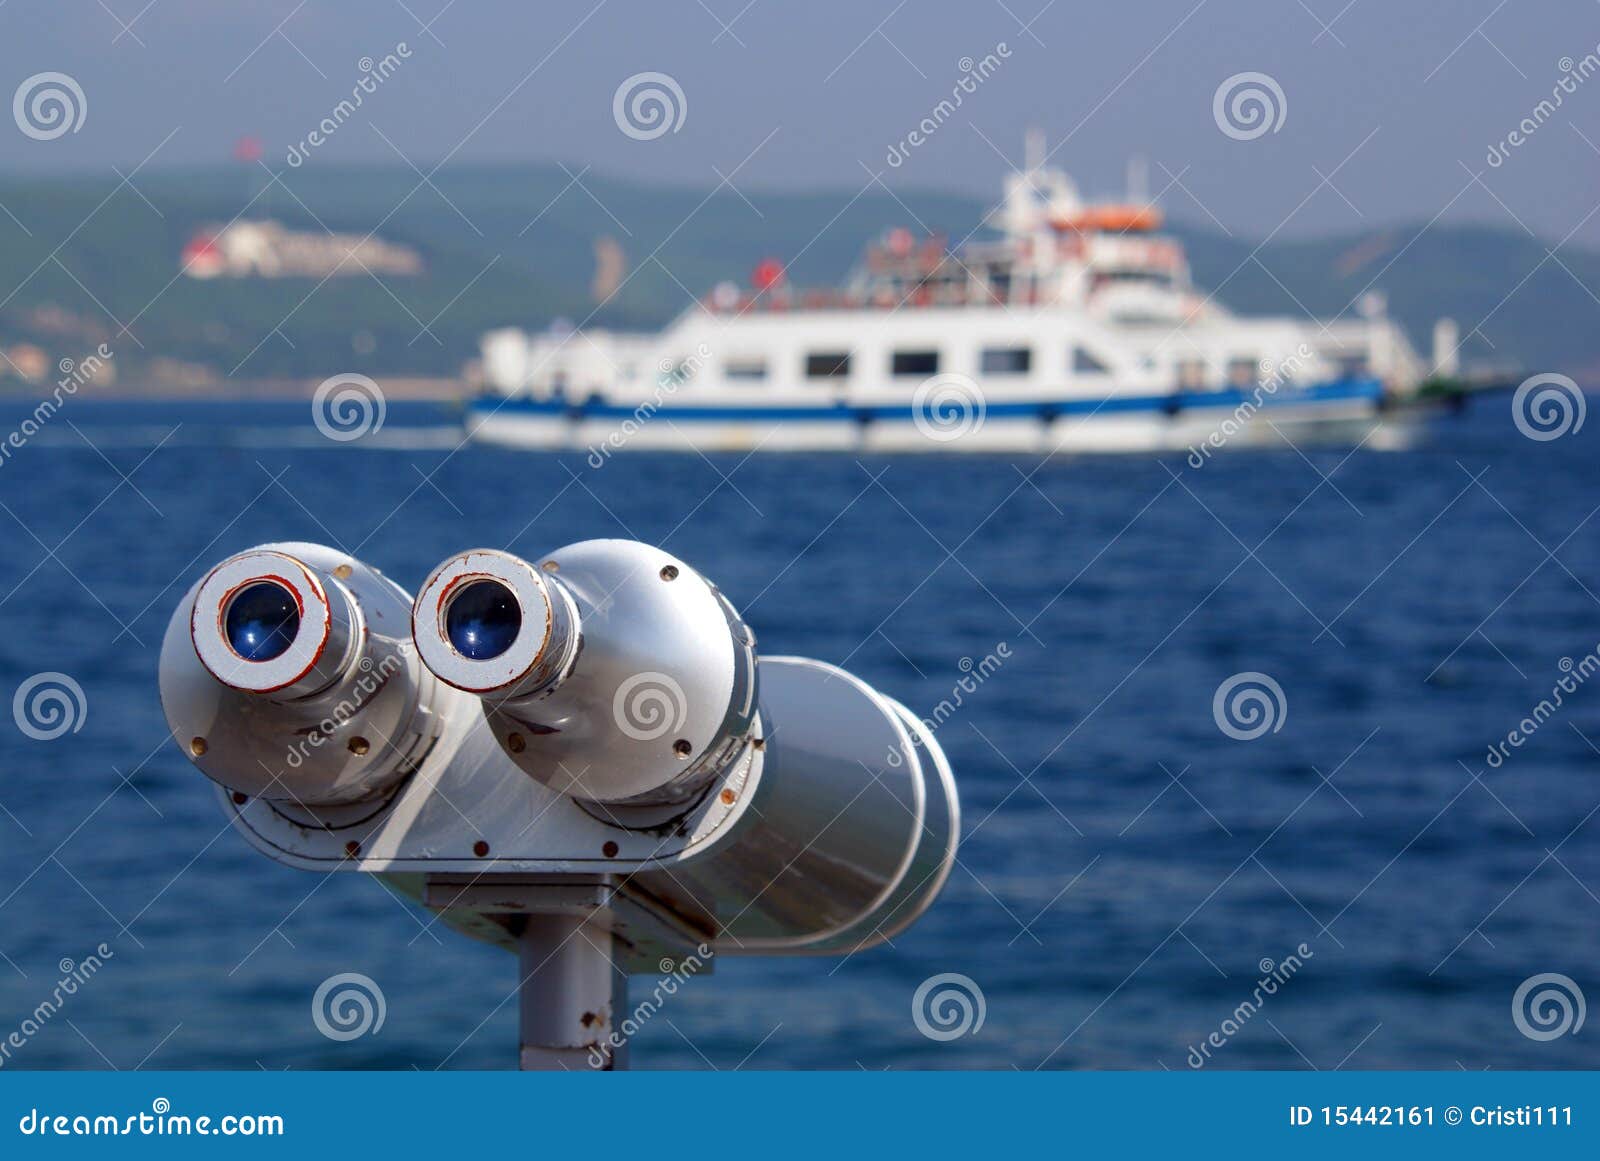 binocular for seeing the far ships